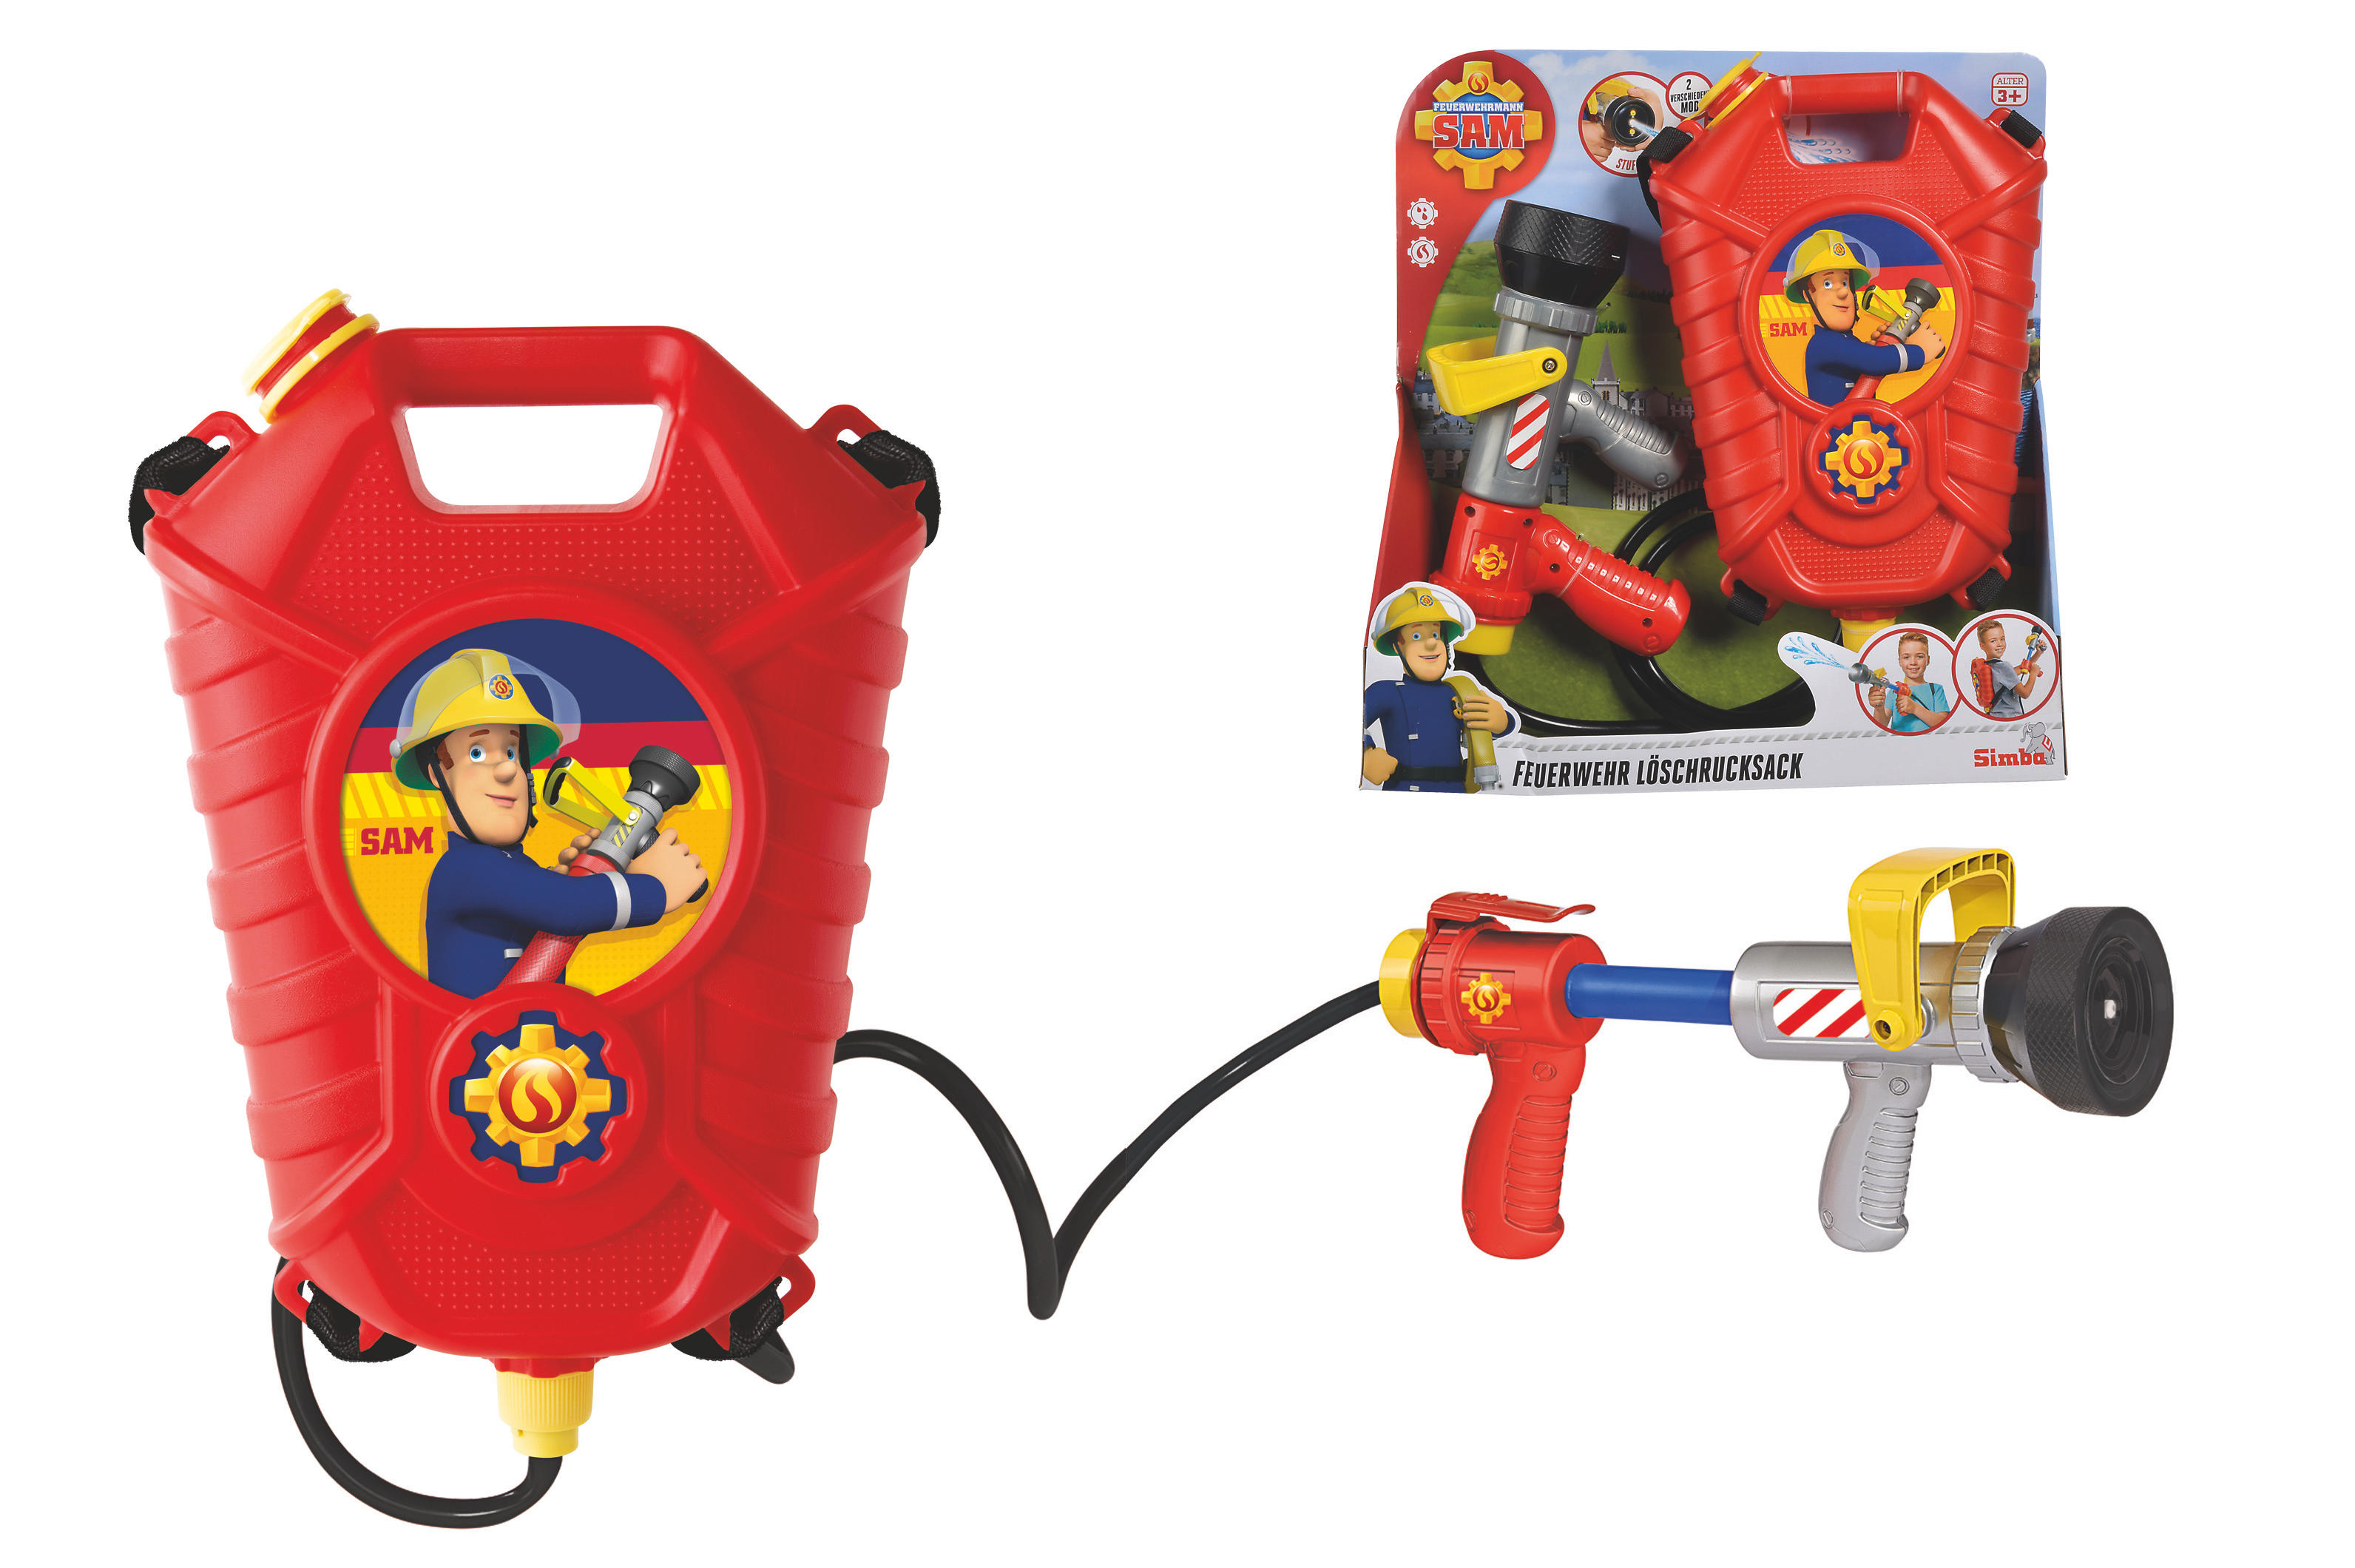 SIMBA TOYS Sam Mehrfarbig Feuerwehr Tankrucksack Spielzeug-Tankrucksack